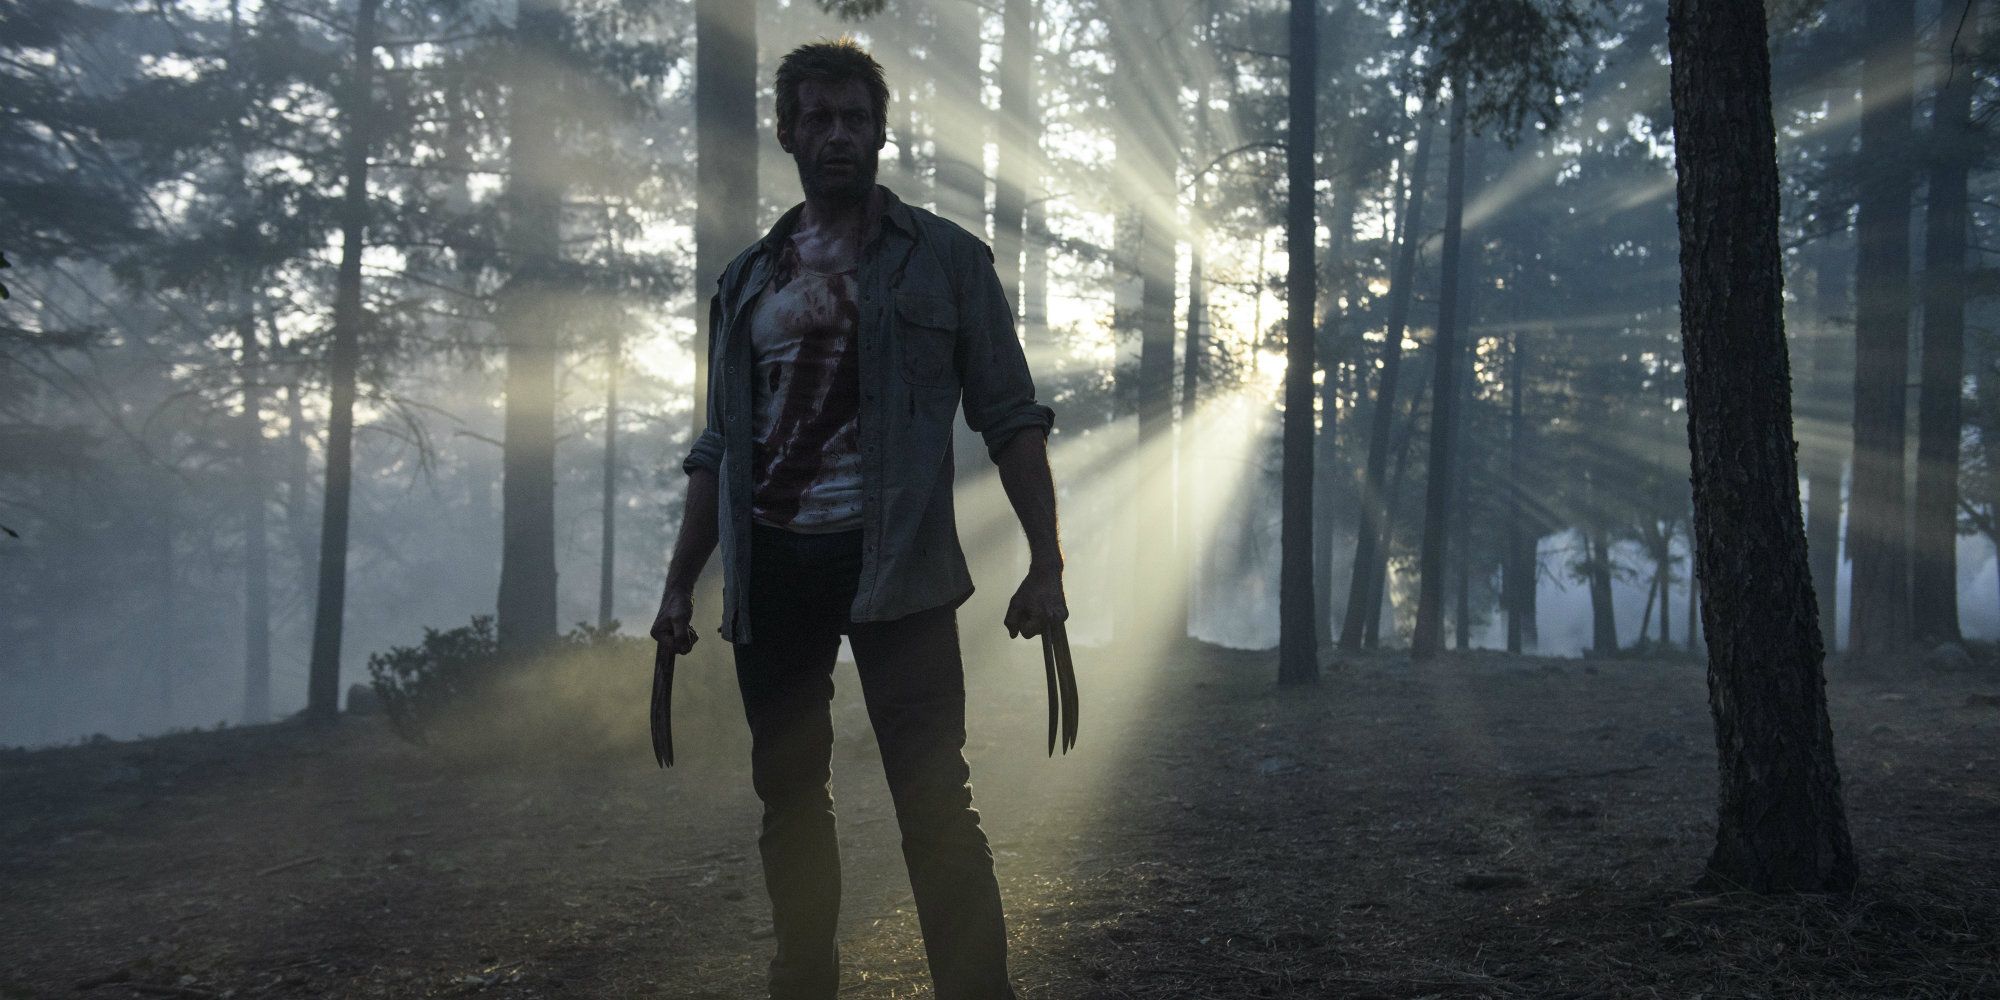 Logan - Hugh Jackman as Wolverine in the woods